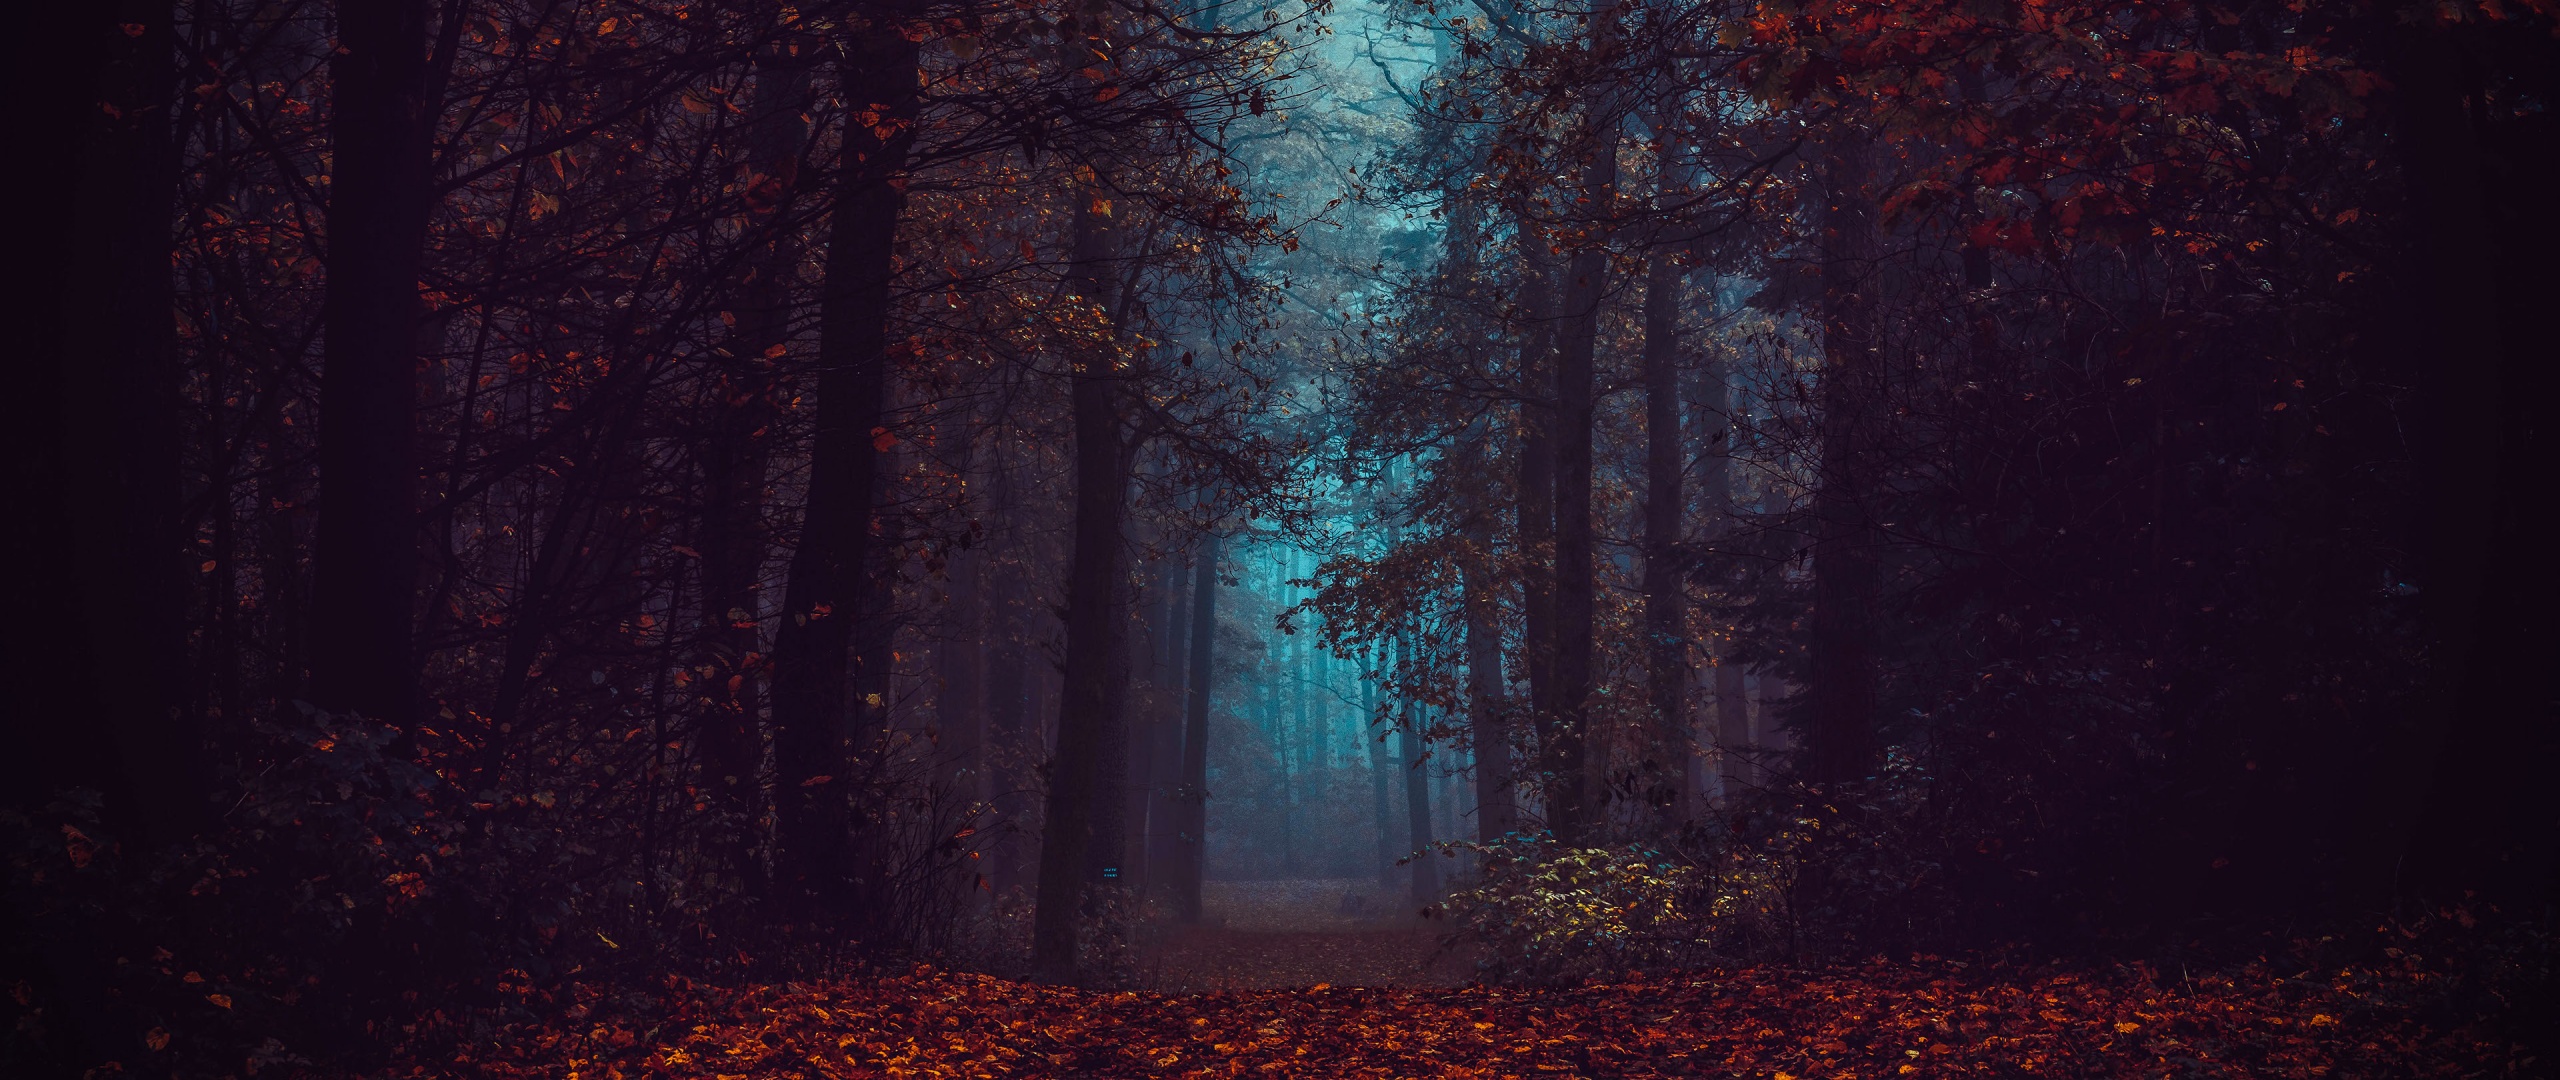 Forest Wallpaper 4K, Fall Foliage, Fog, Morning, Dark